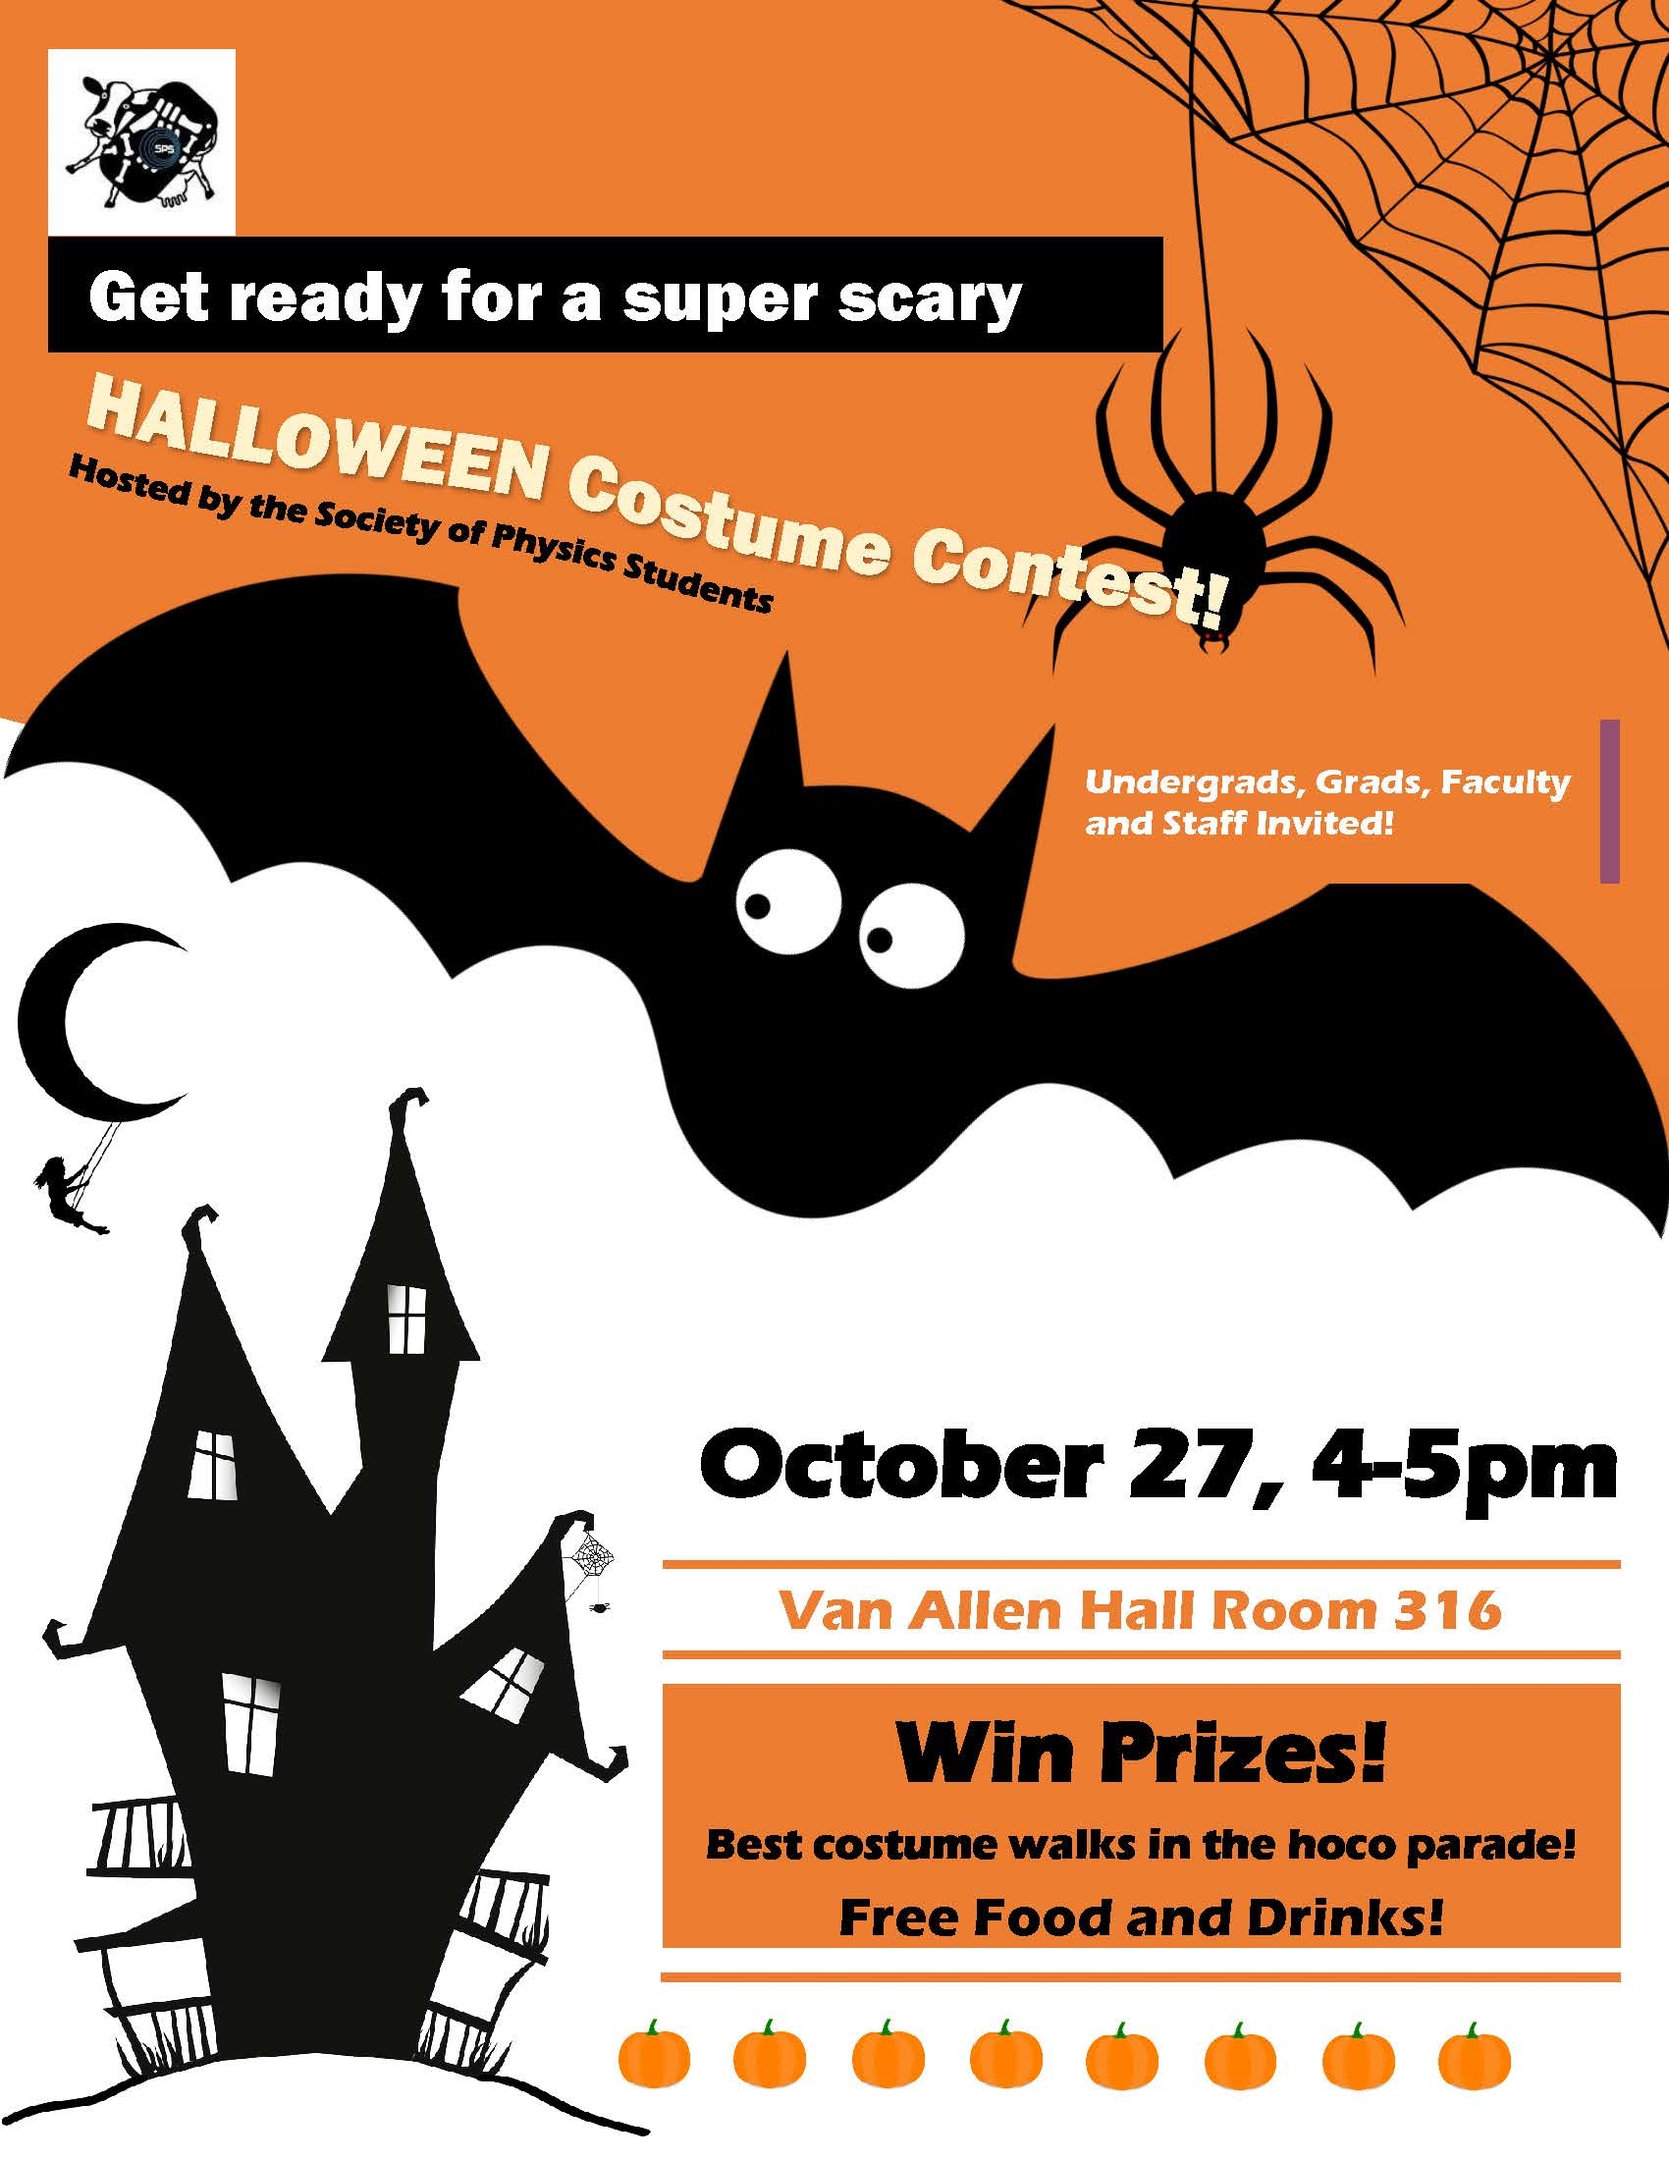 SPS Halloween Costume Contest